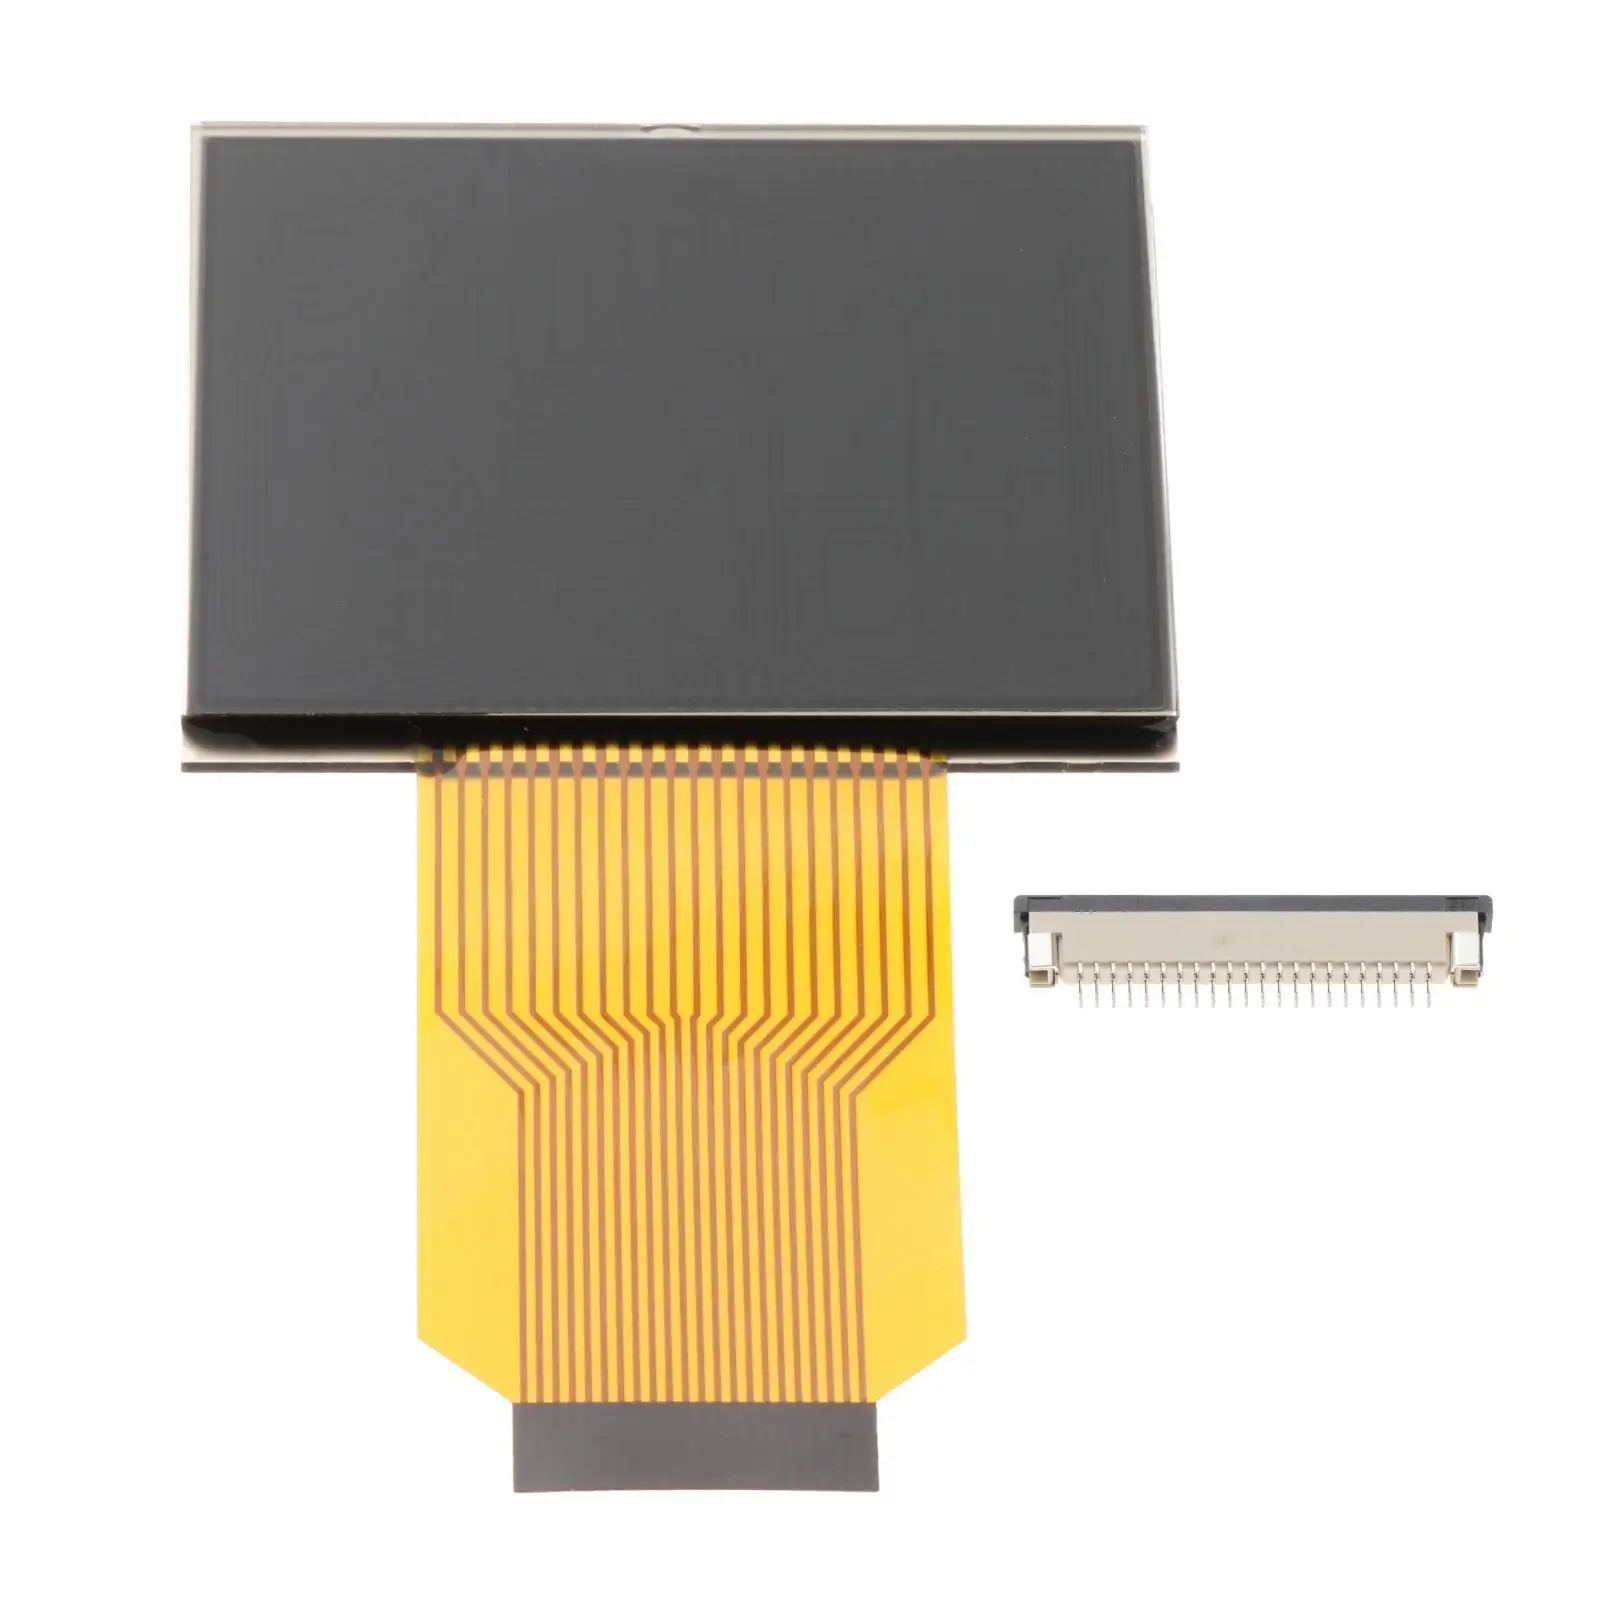 Pixel Repair LCD Screen Replace High Performance Automotive, LCD Display Instrument Pixel Repair  ,Fit for 9-5 50-47-600